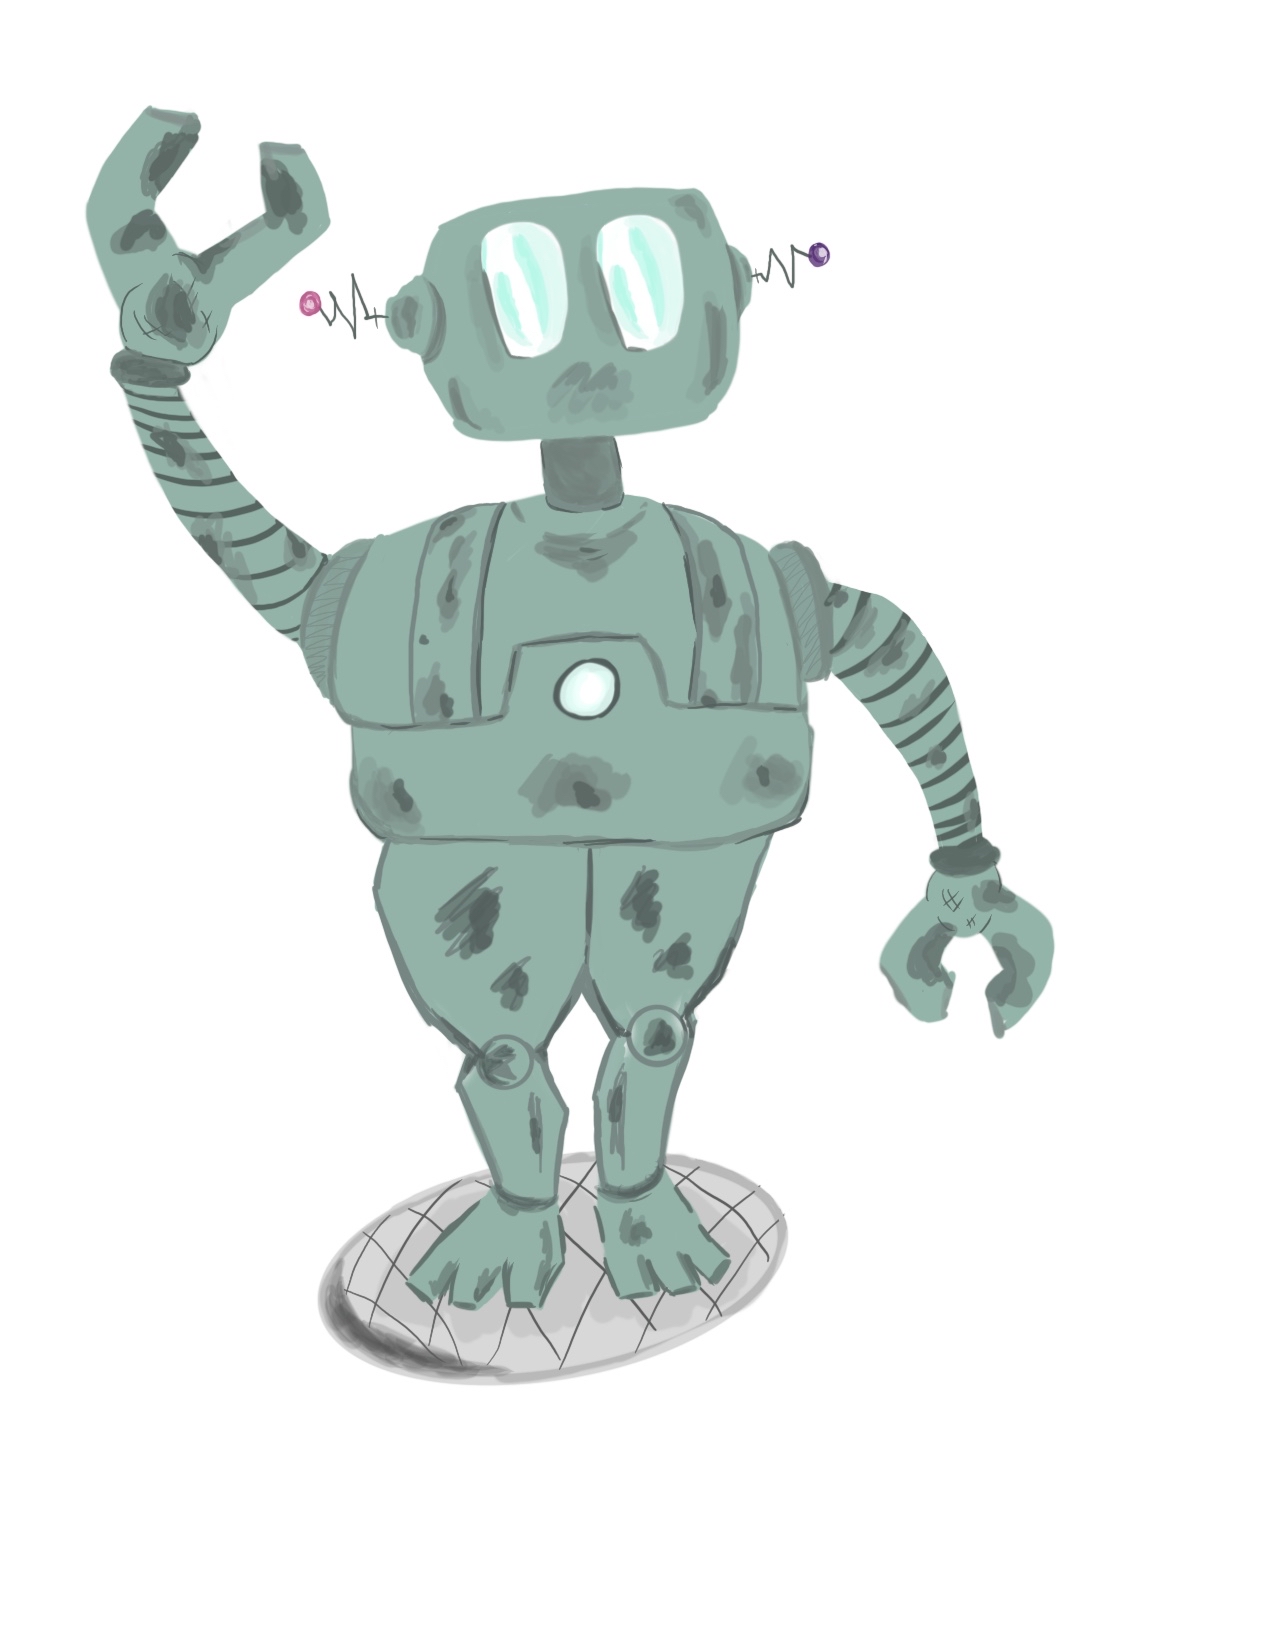 The Junkyard Robot